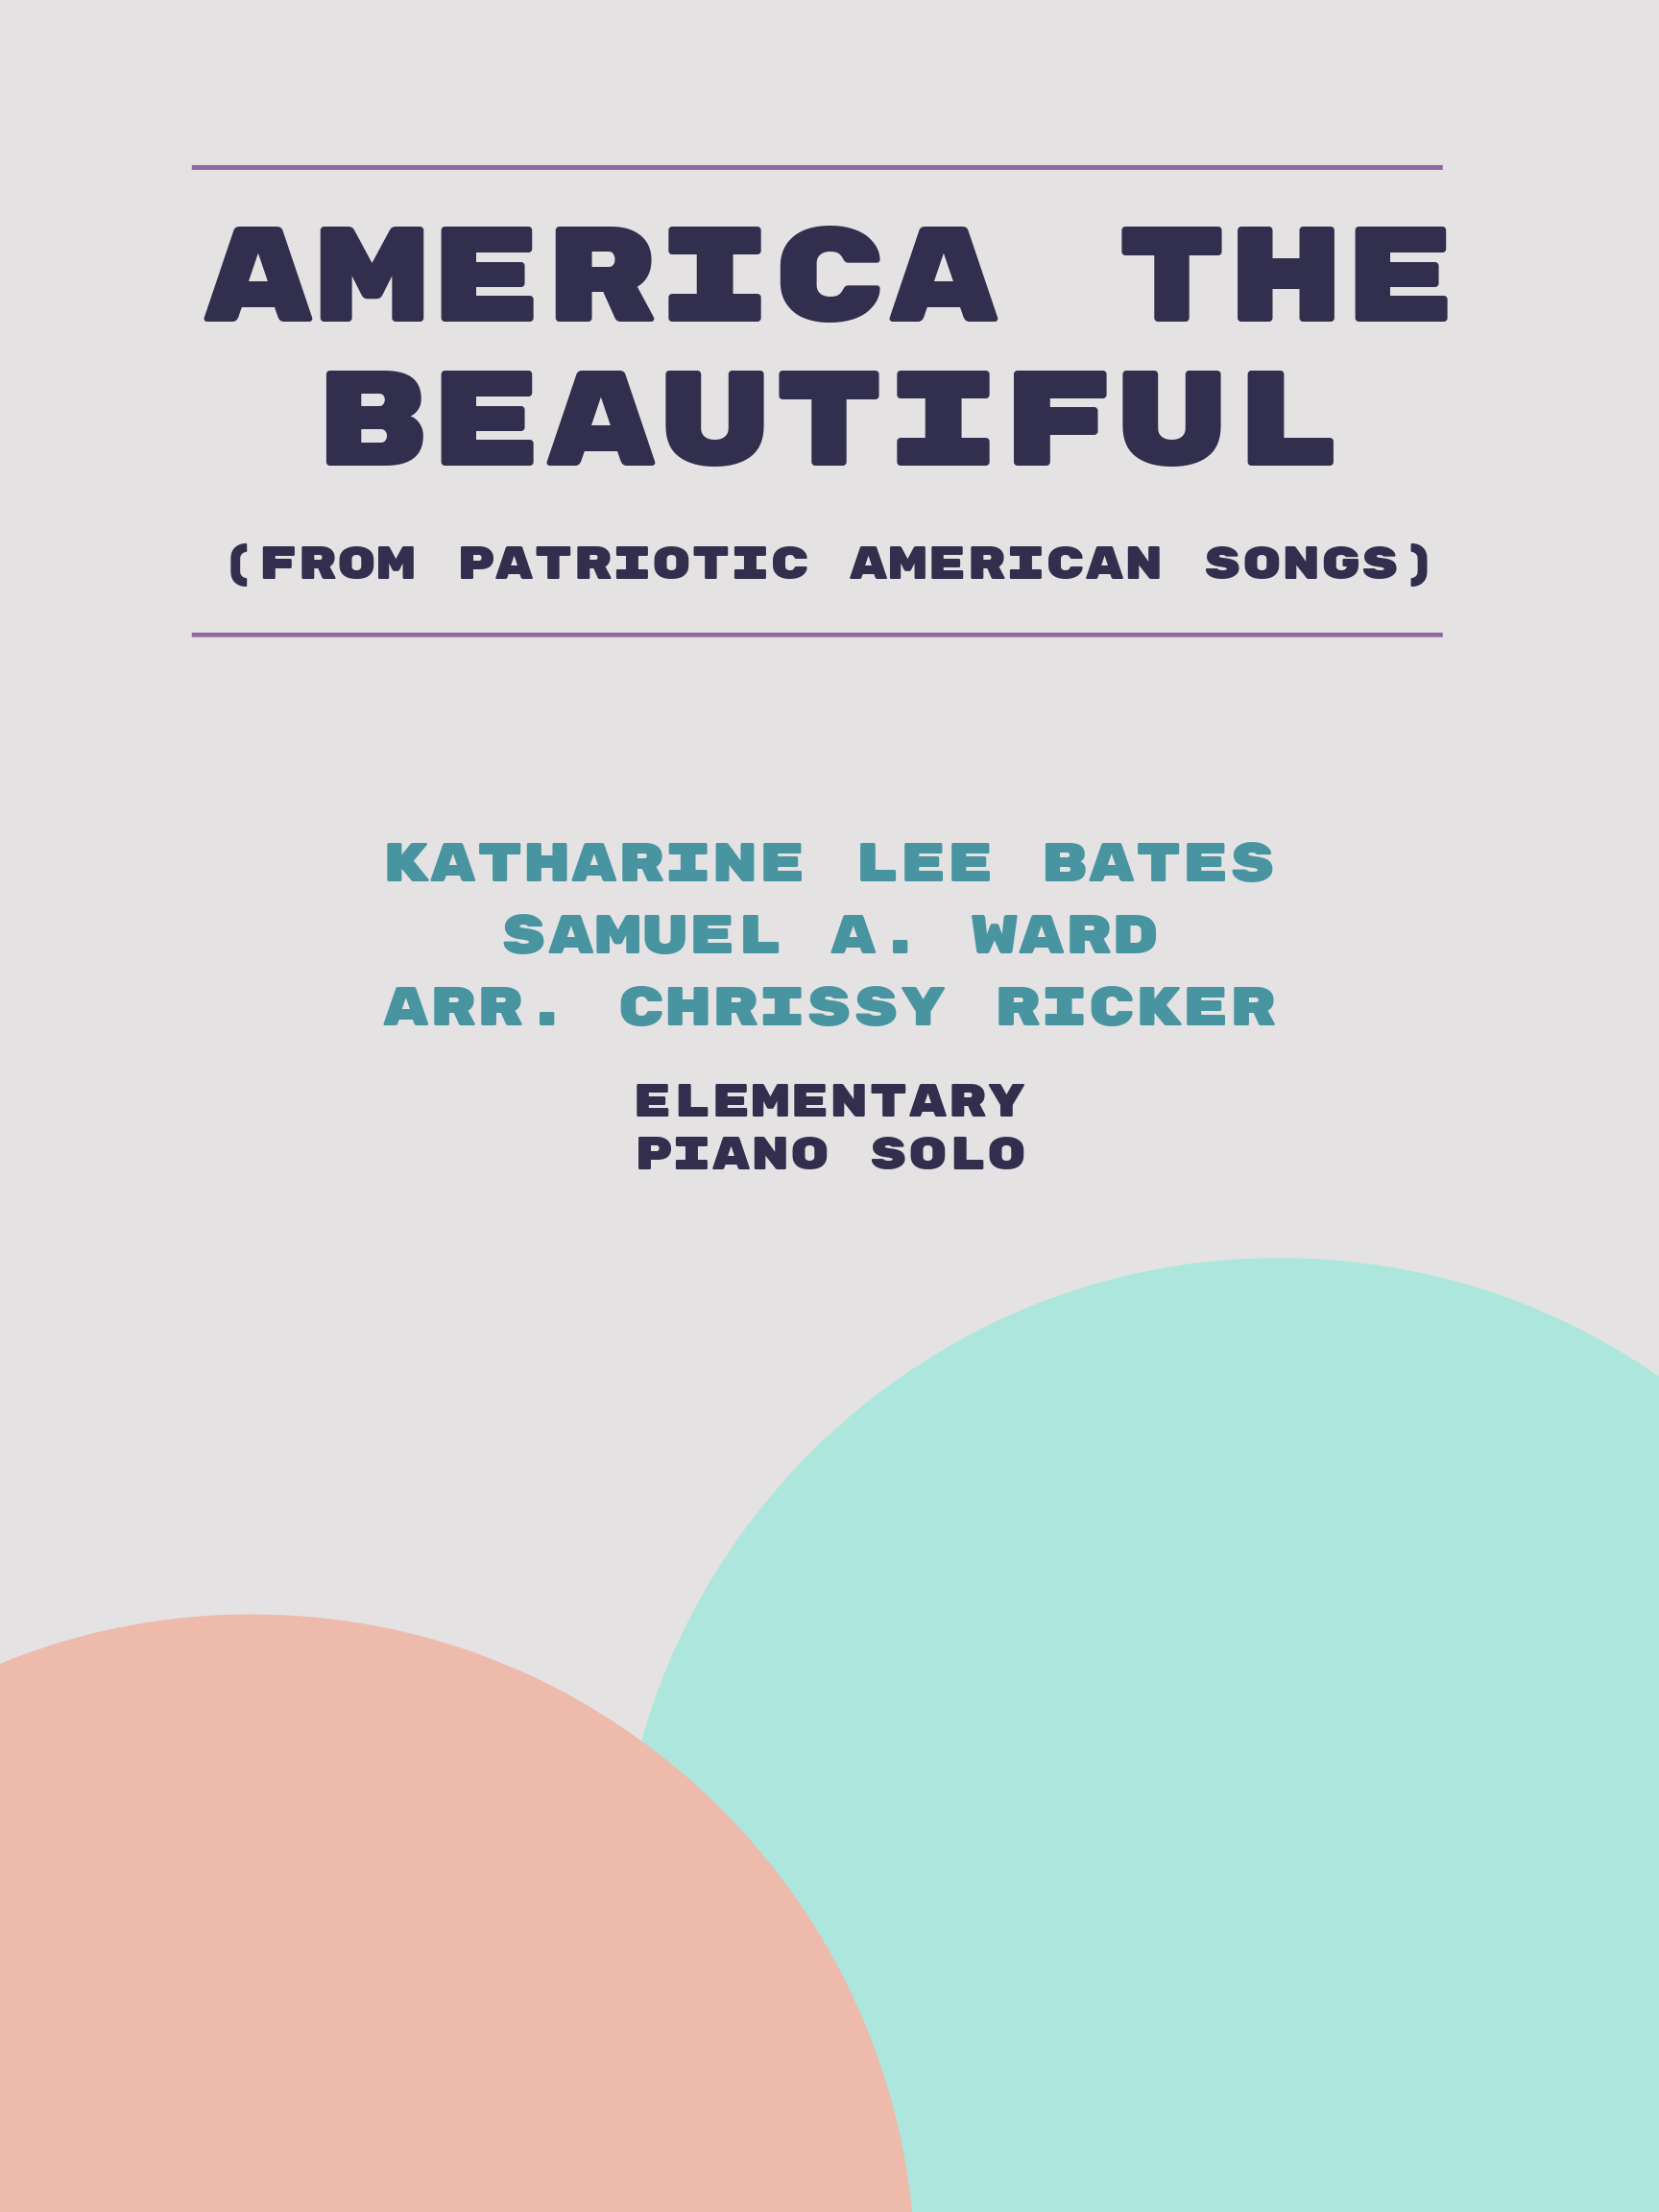 America the Beautiful by Katharine Lee Bates, Samuel A. Ward